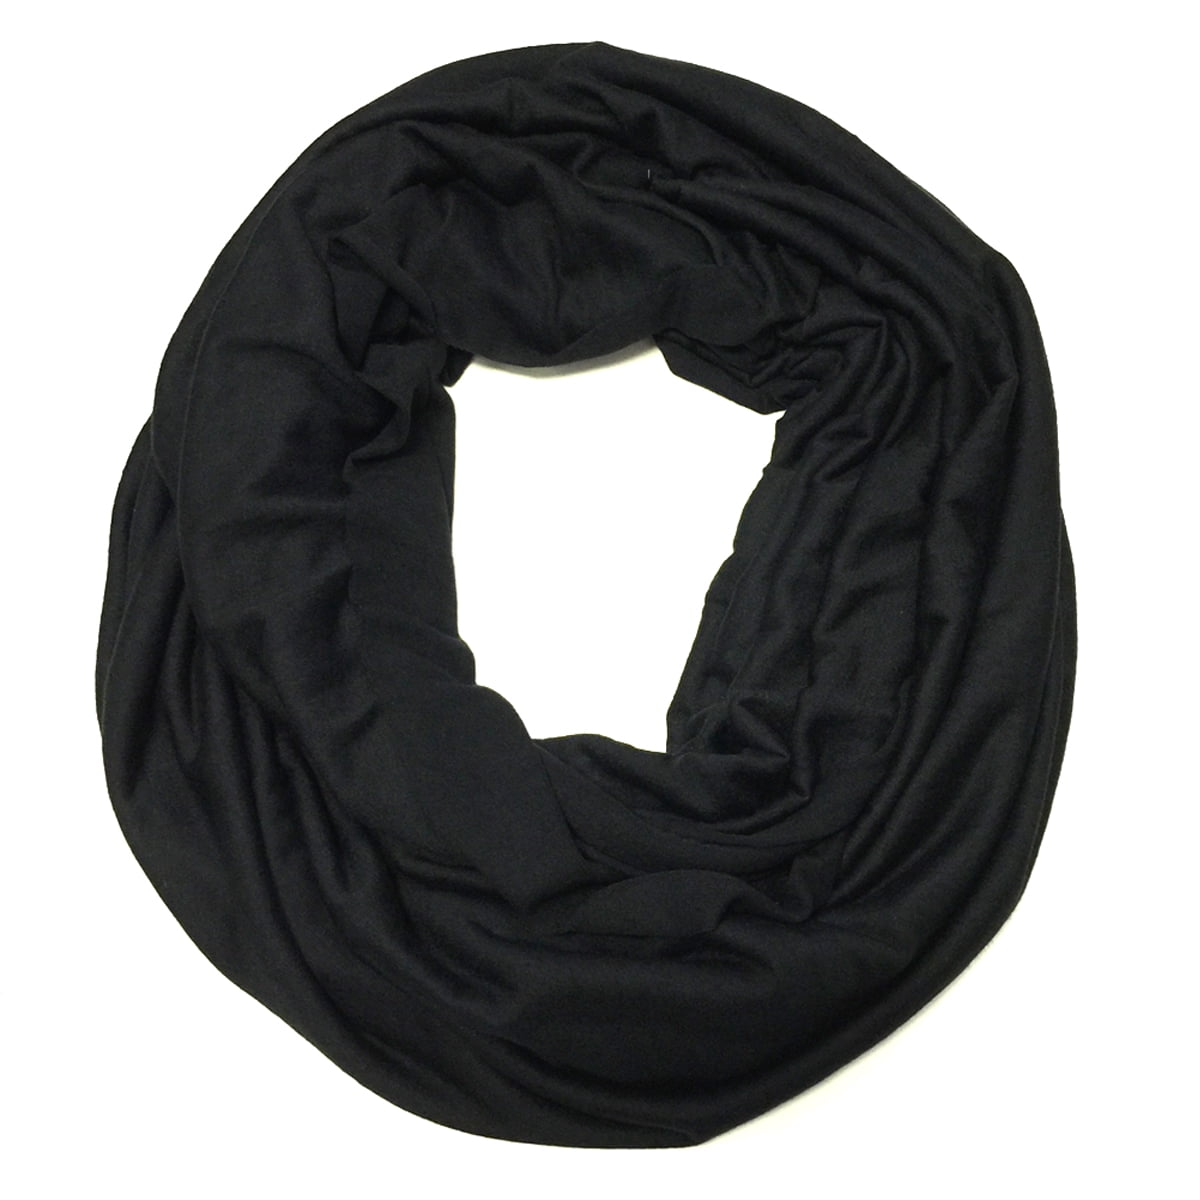 Wrapables® Soft Jersey Knit Infinity Scarf, Black - Walmart.com